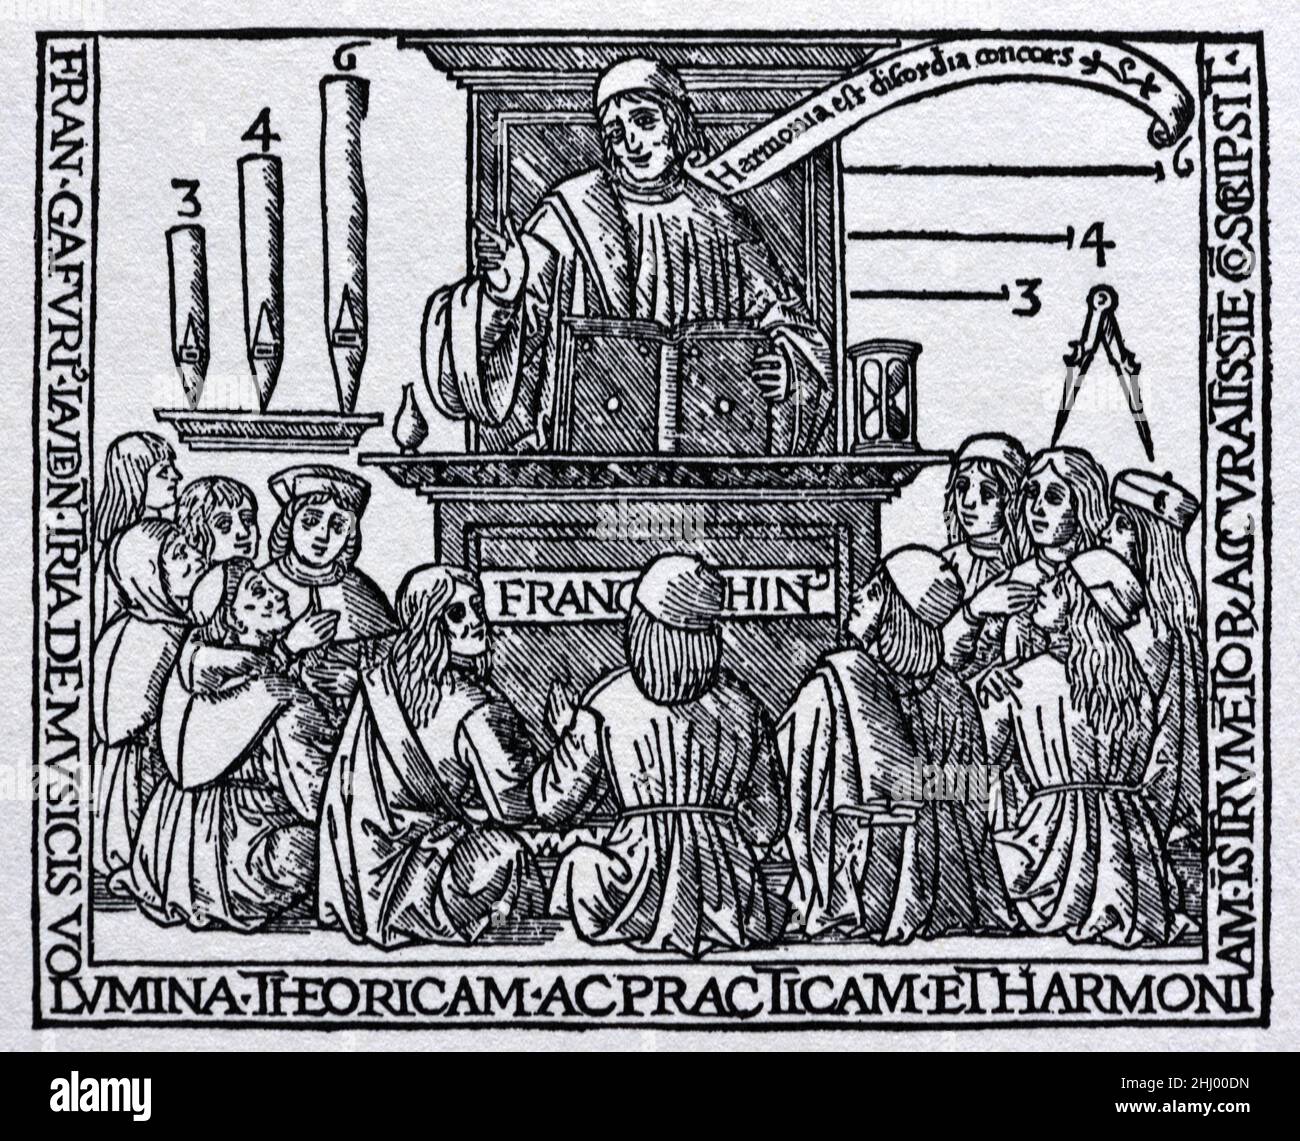 Franchinus Gaffurius (1451-1522) aka Franchino Gaffurio, Italian Musician & Composer Teaching Students during Renaissance Italy. 1518 Woodcut Print, Engraving or Illustration. Stock Photo